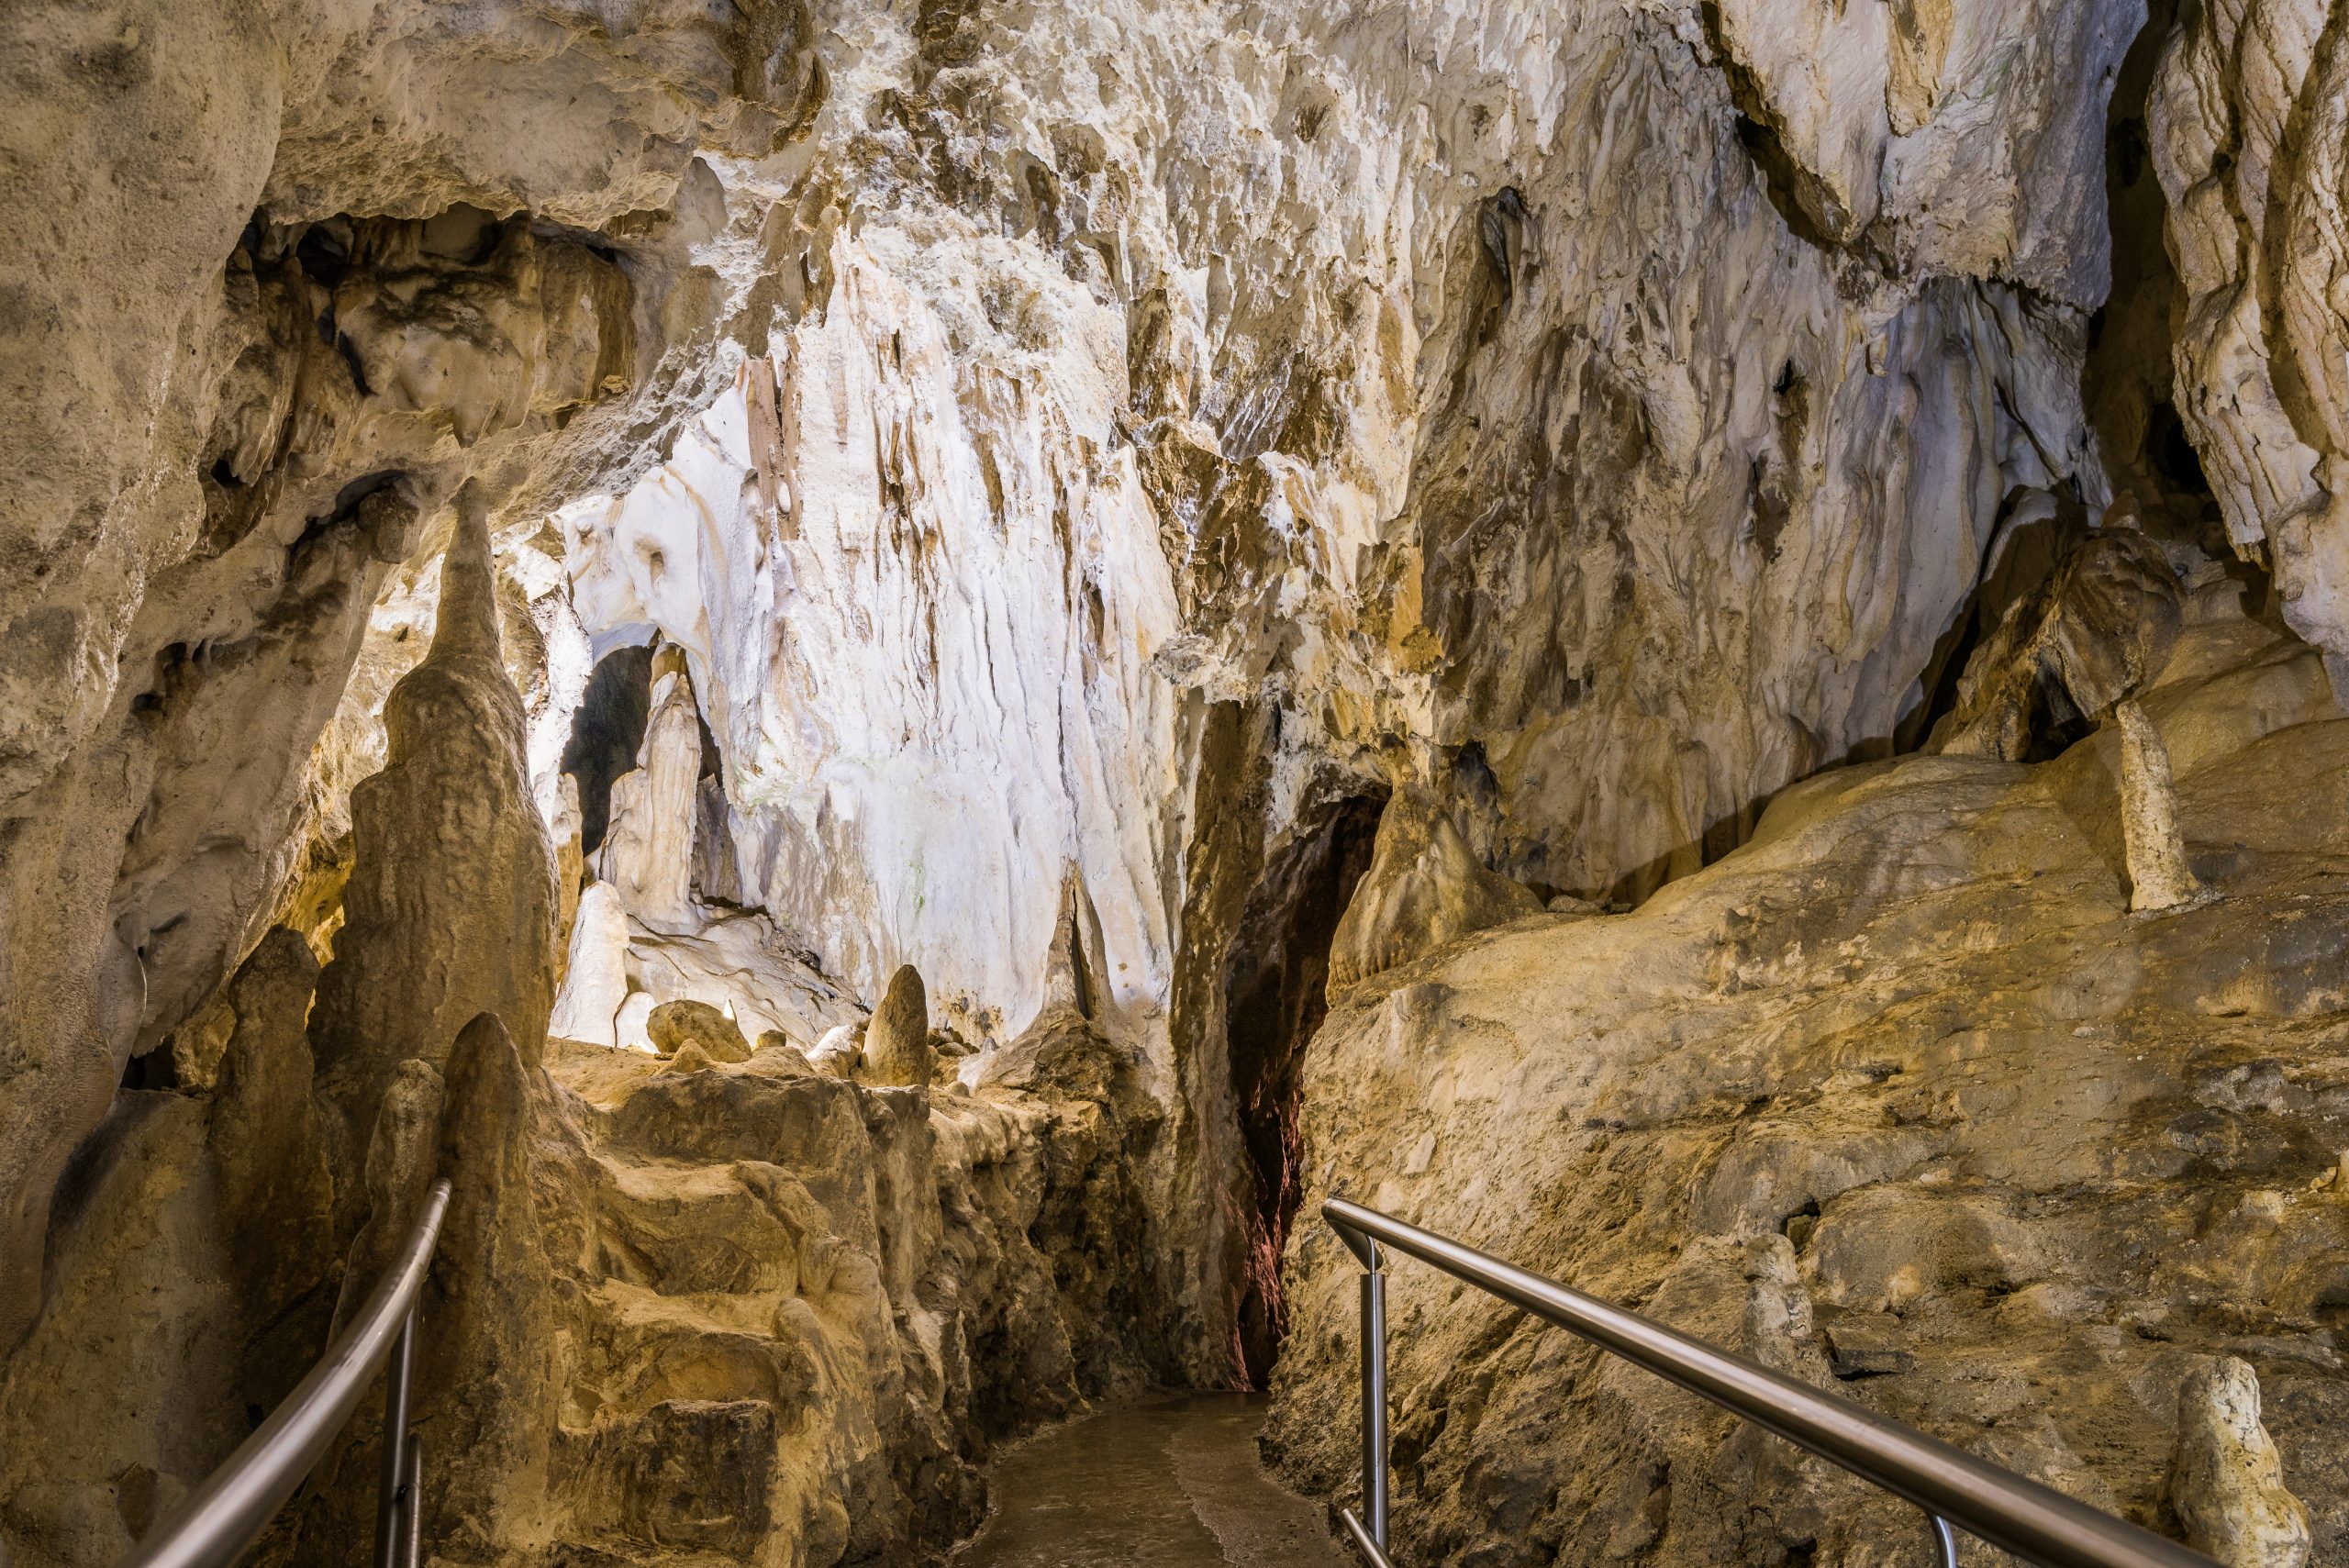 Harmanecká jaskyňa